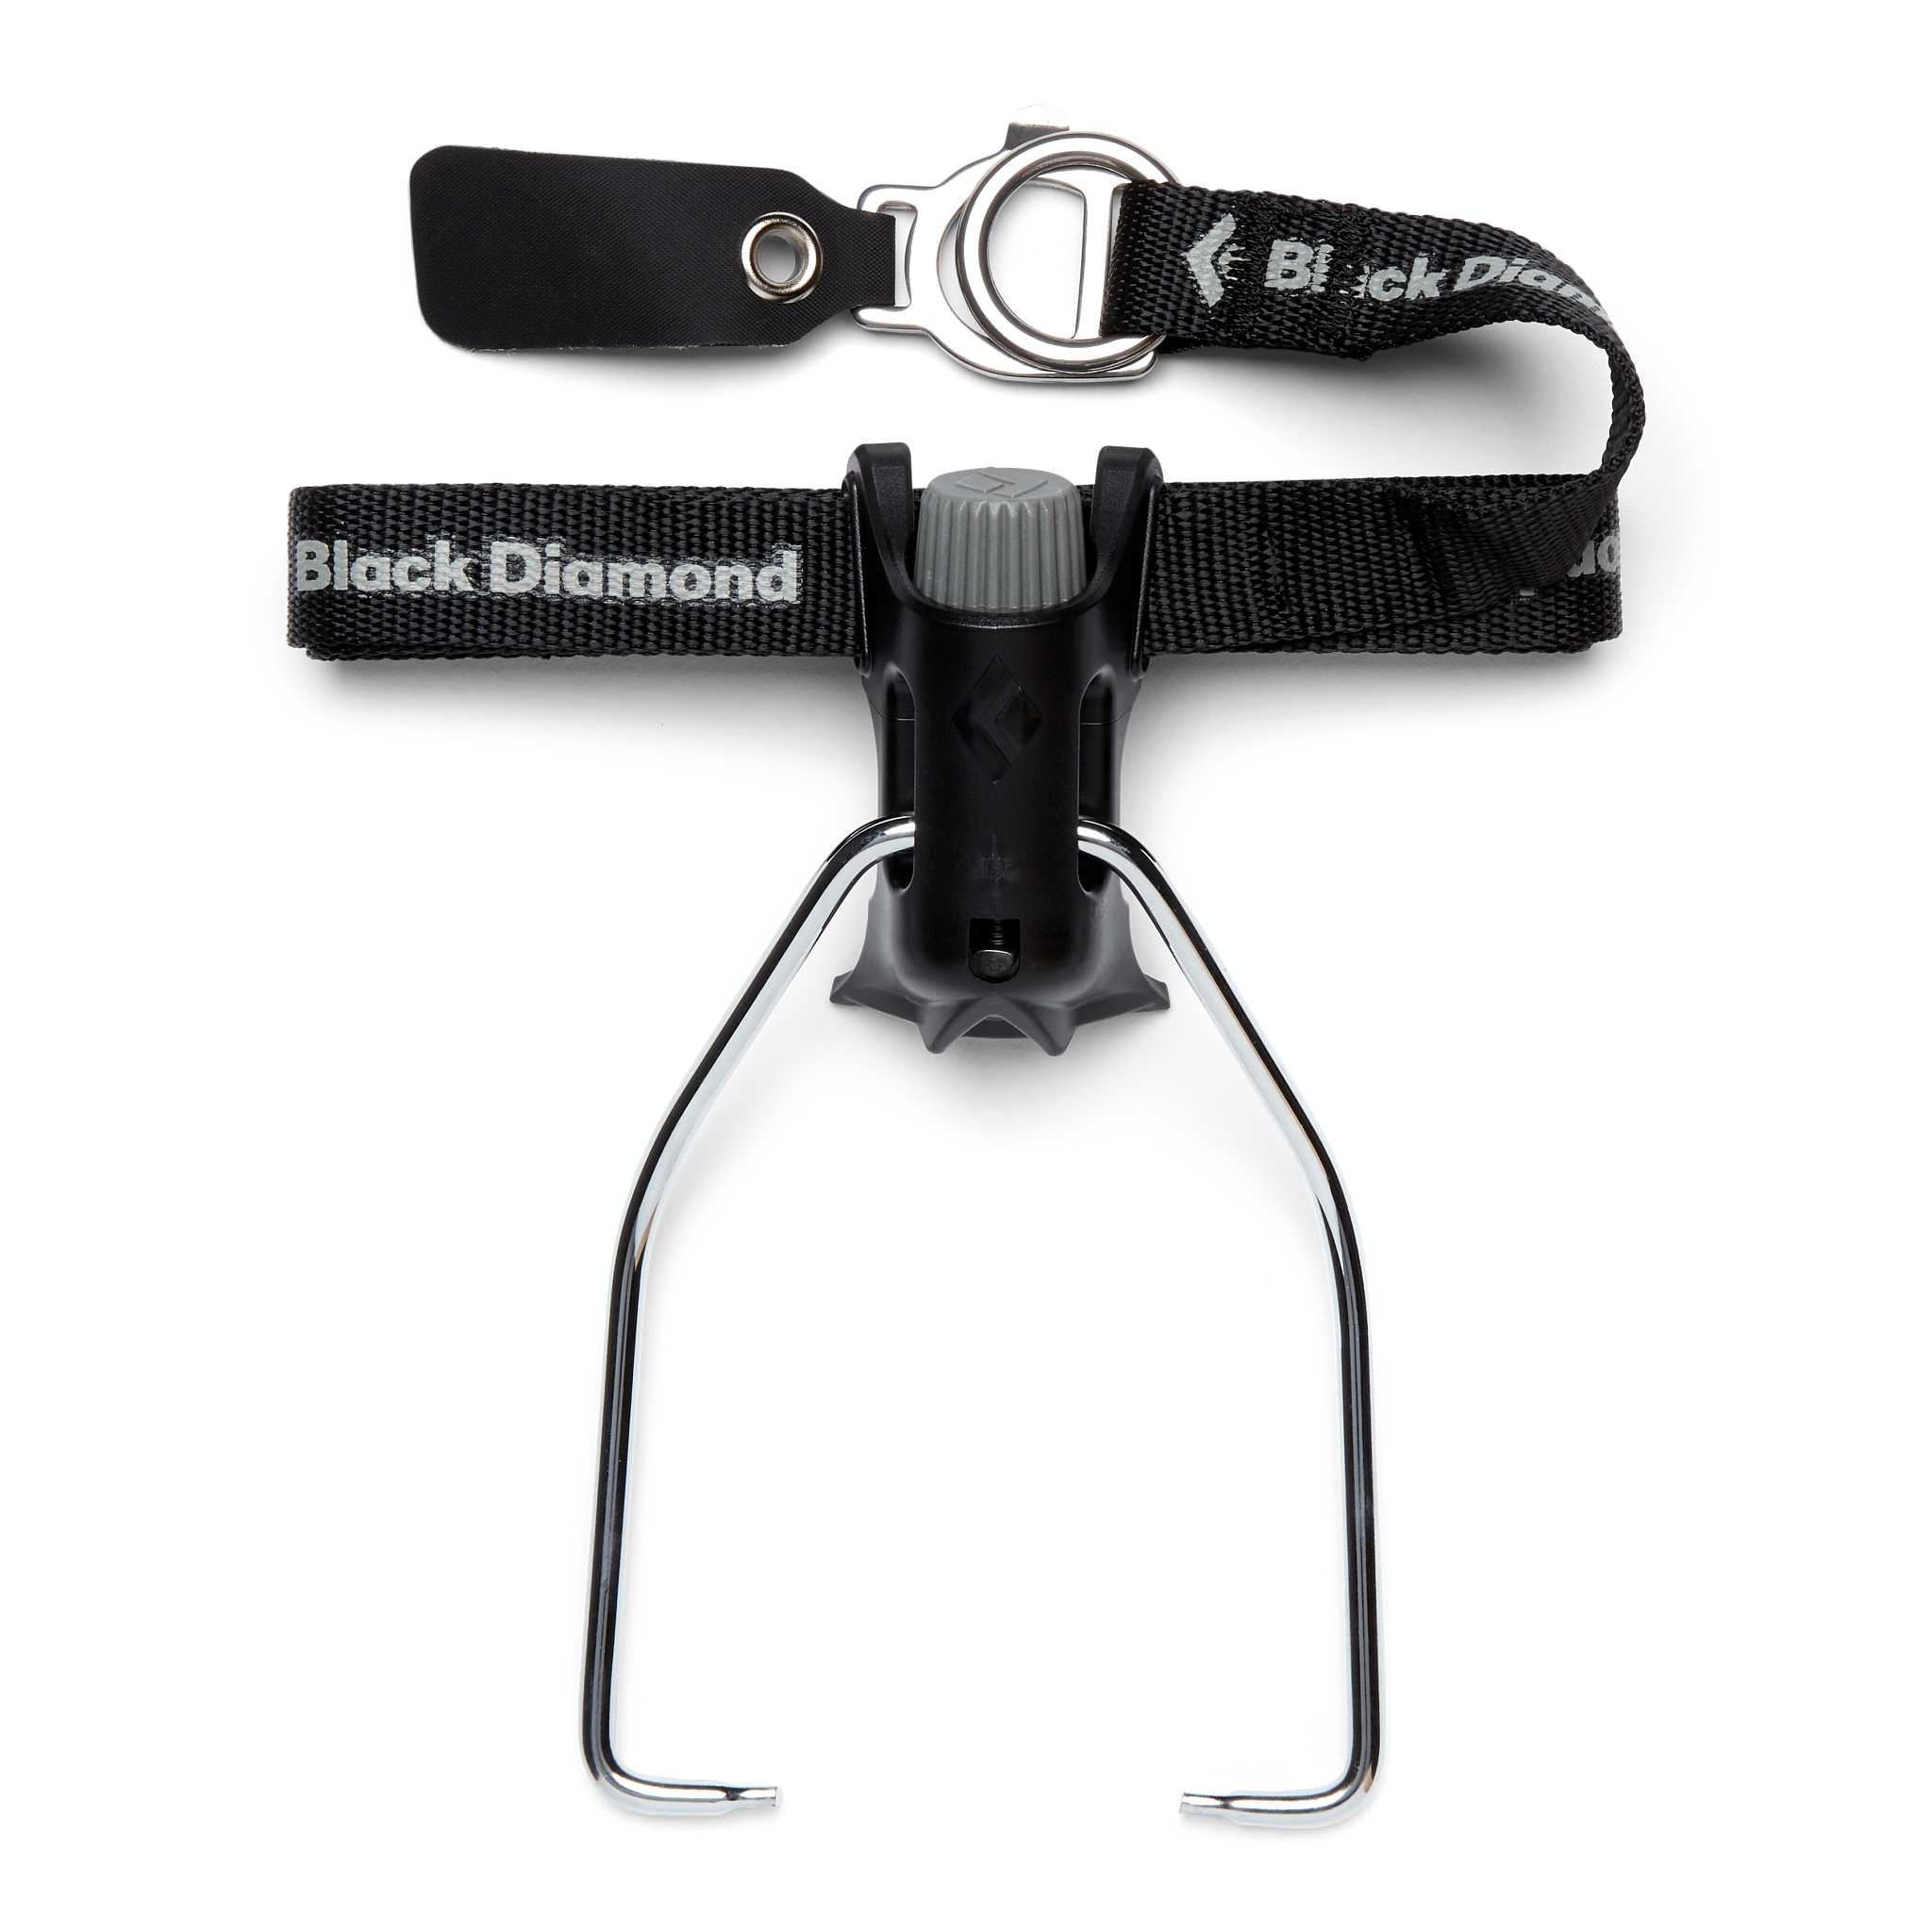 Black Diamond Equipment Crampon Heel Lever - Regular Size Right